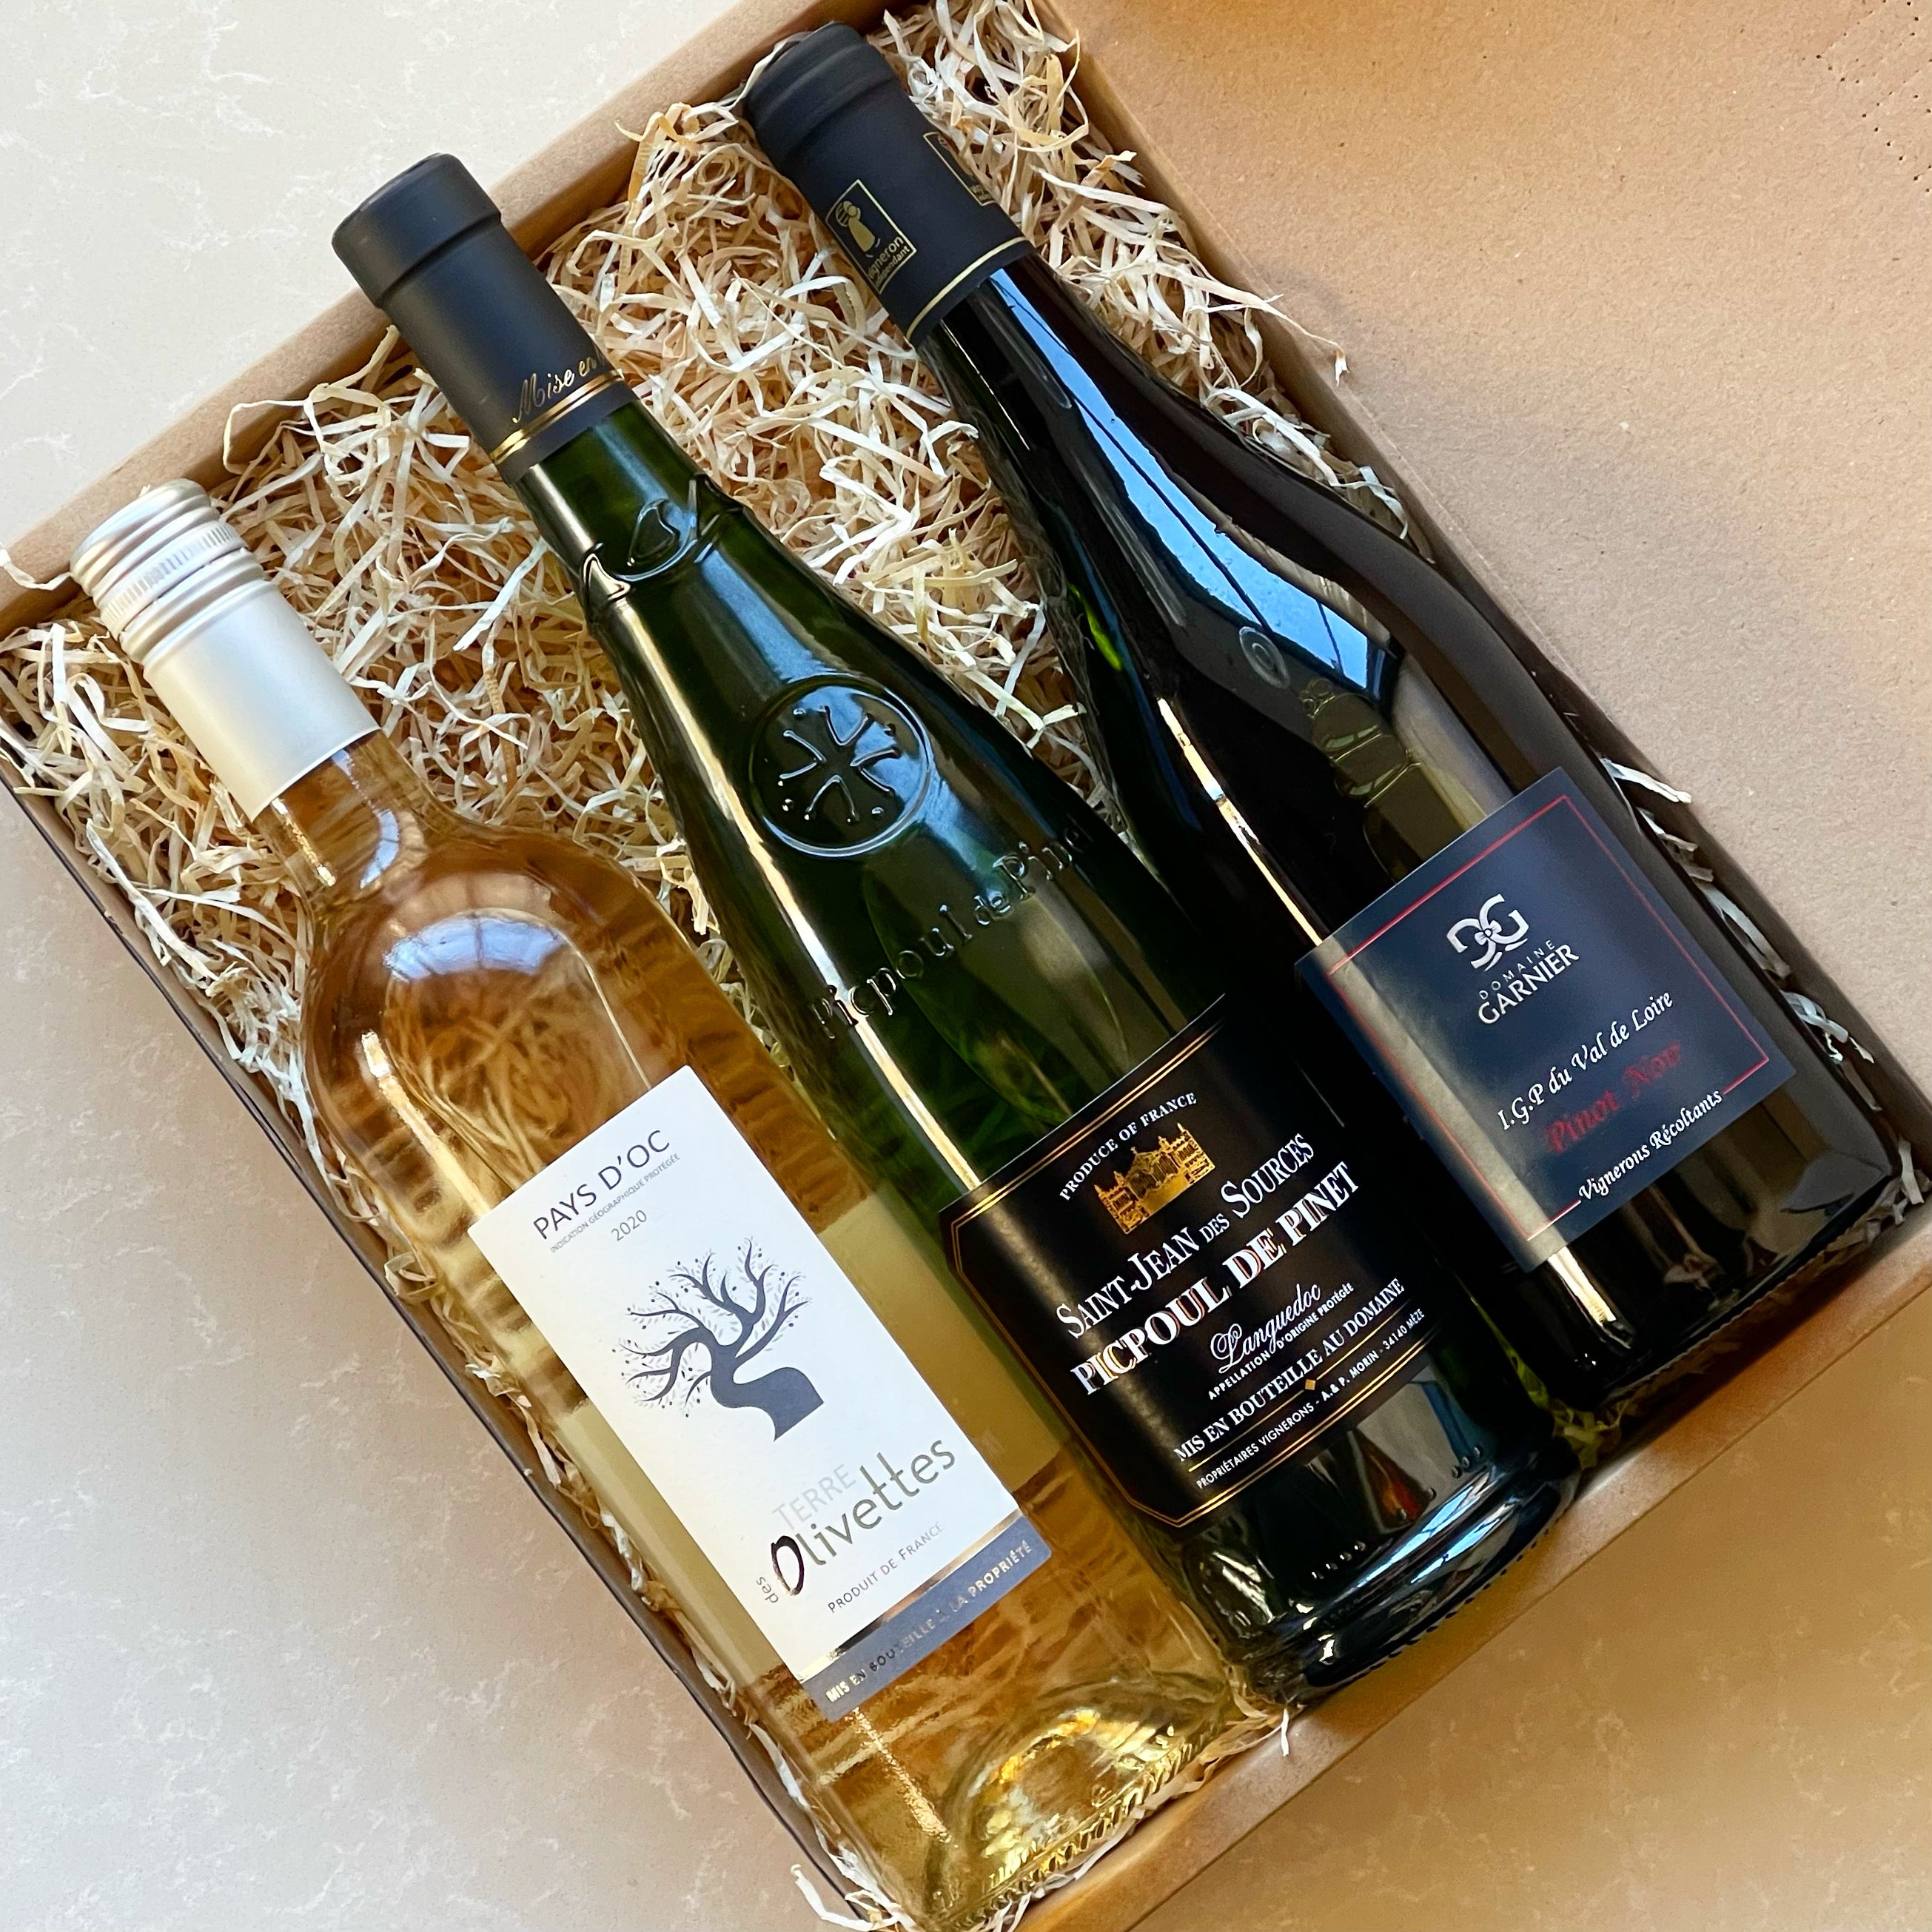 Wine selection box